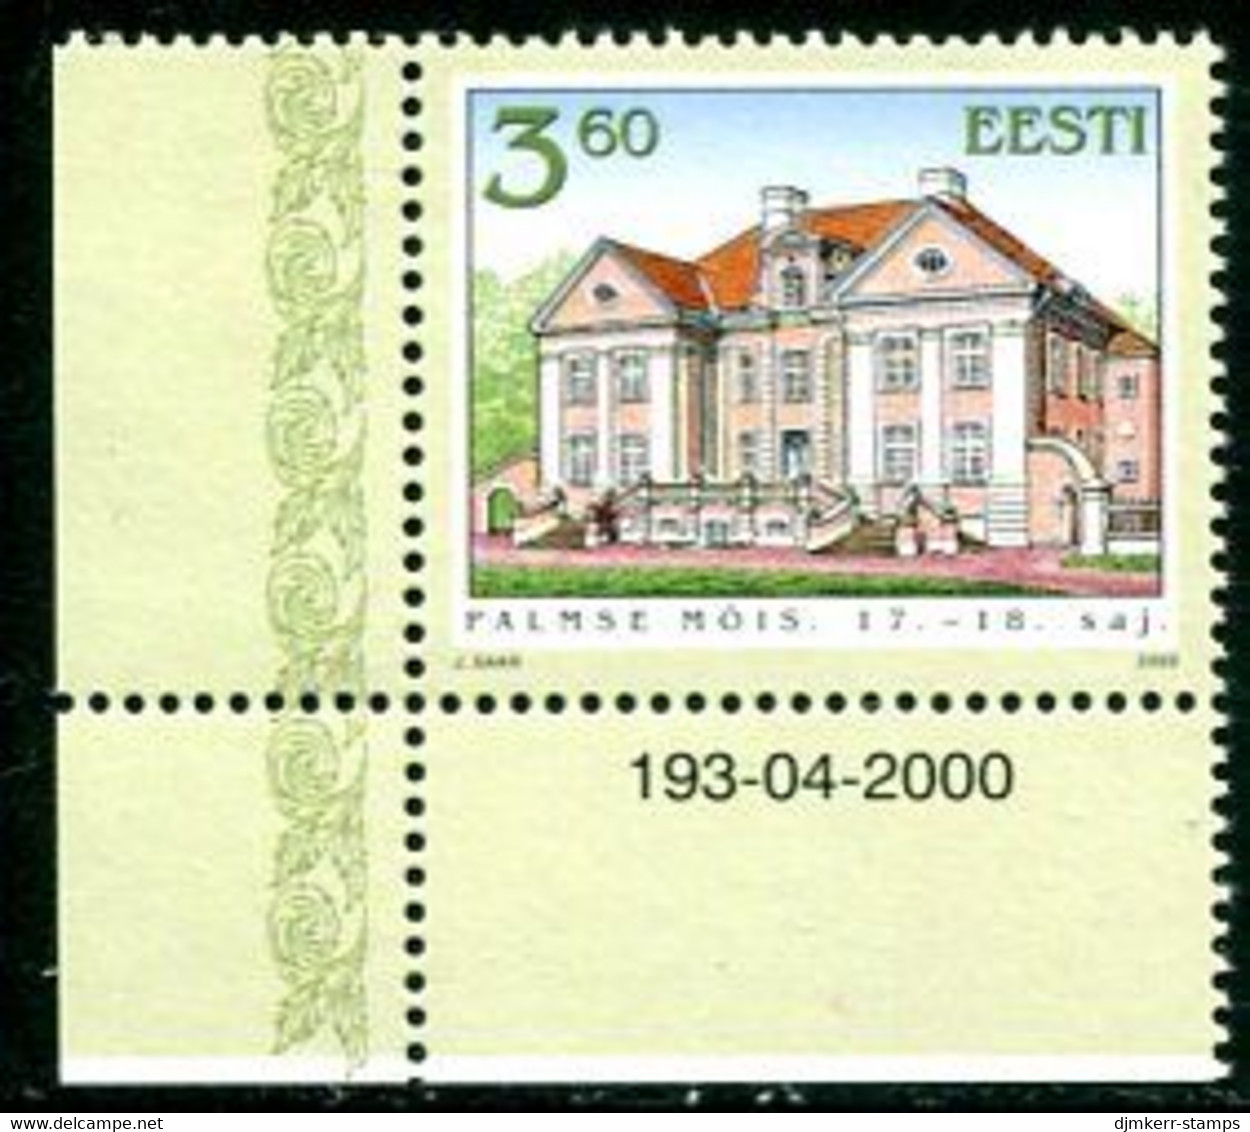 ESTONIA 2000 Palmse Manor House   MNH / **.  Michel 372 - Estonie